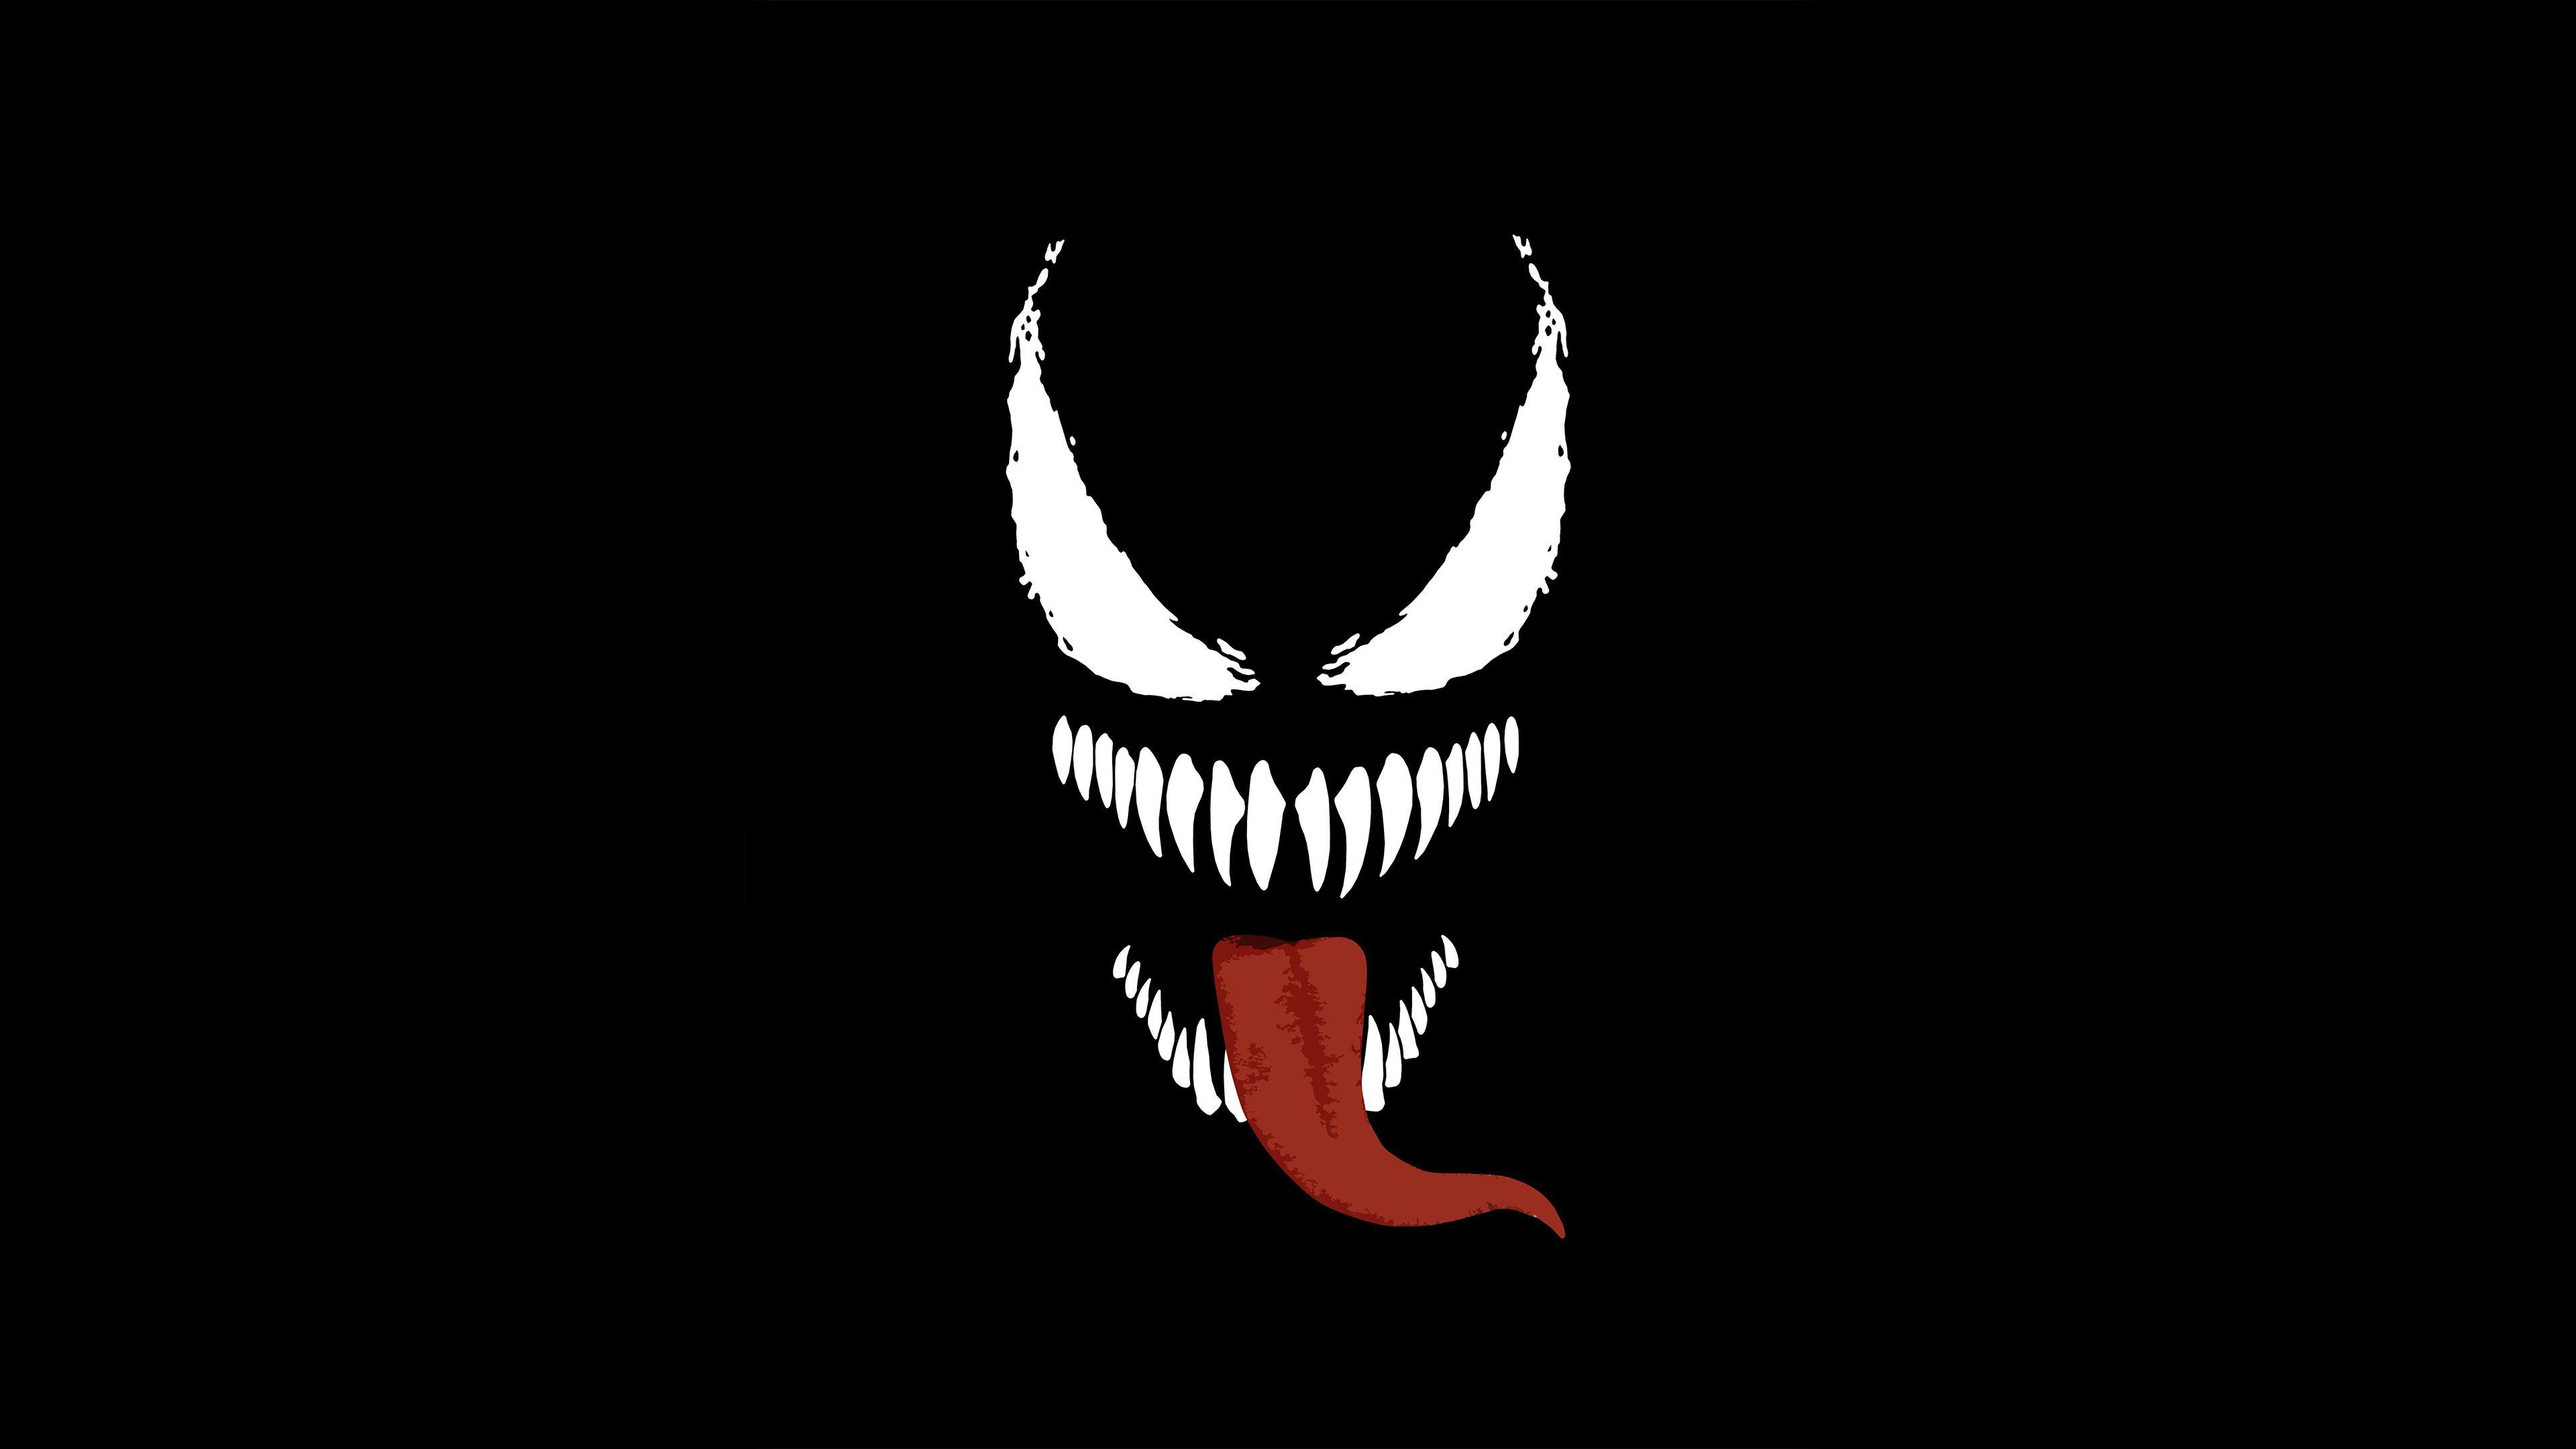 Venom 4k Arts Venom Wallpaper, Supervillain Wallpaper, Superheroes Wallpaper, Reddit Wallpaper, Hd Wall. Logo Wallpaper Hd, Art Wallpaper, Superhero Wallpaper